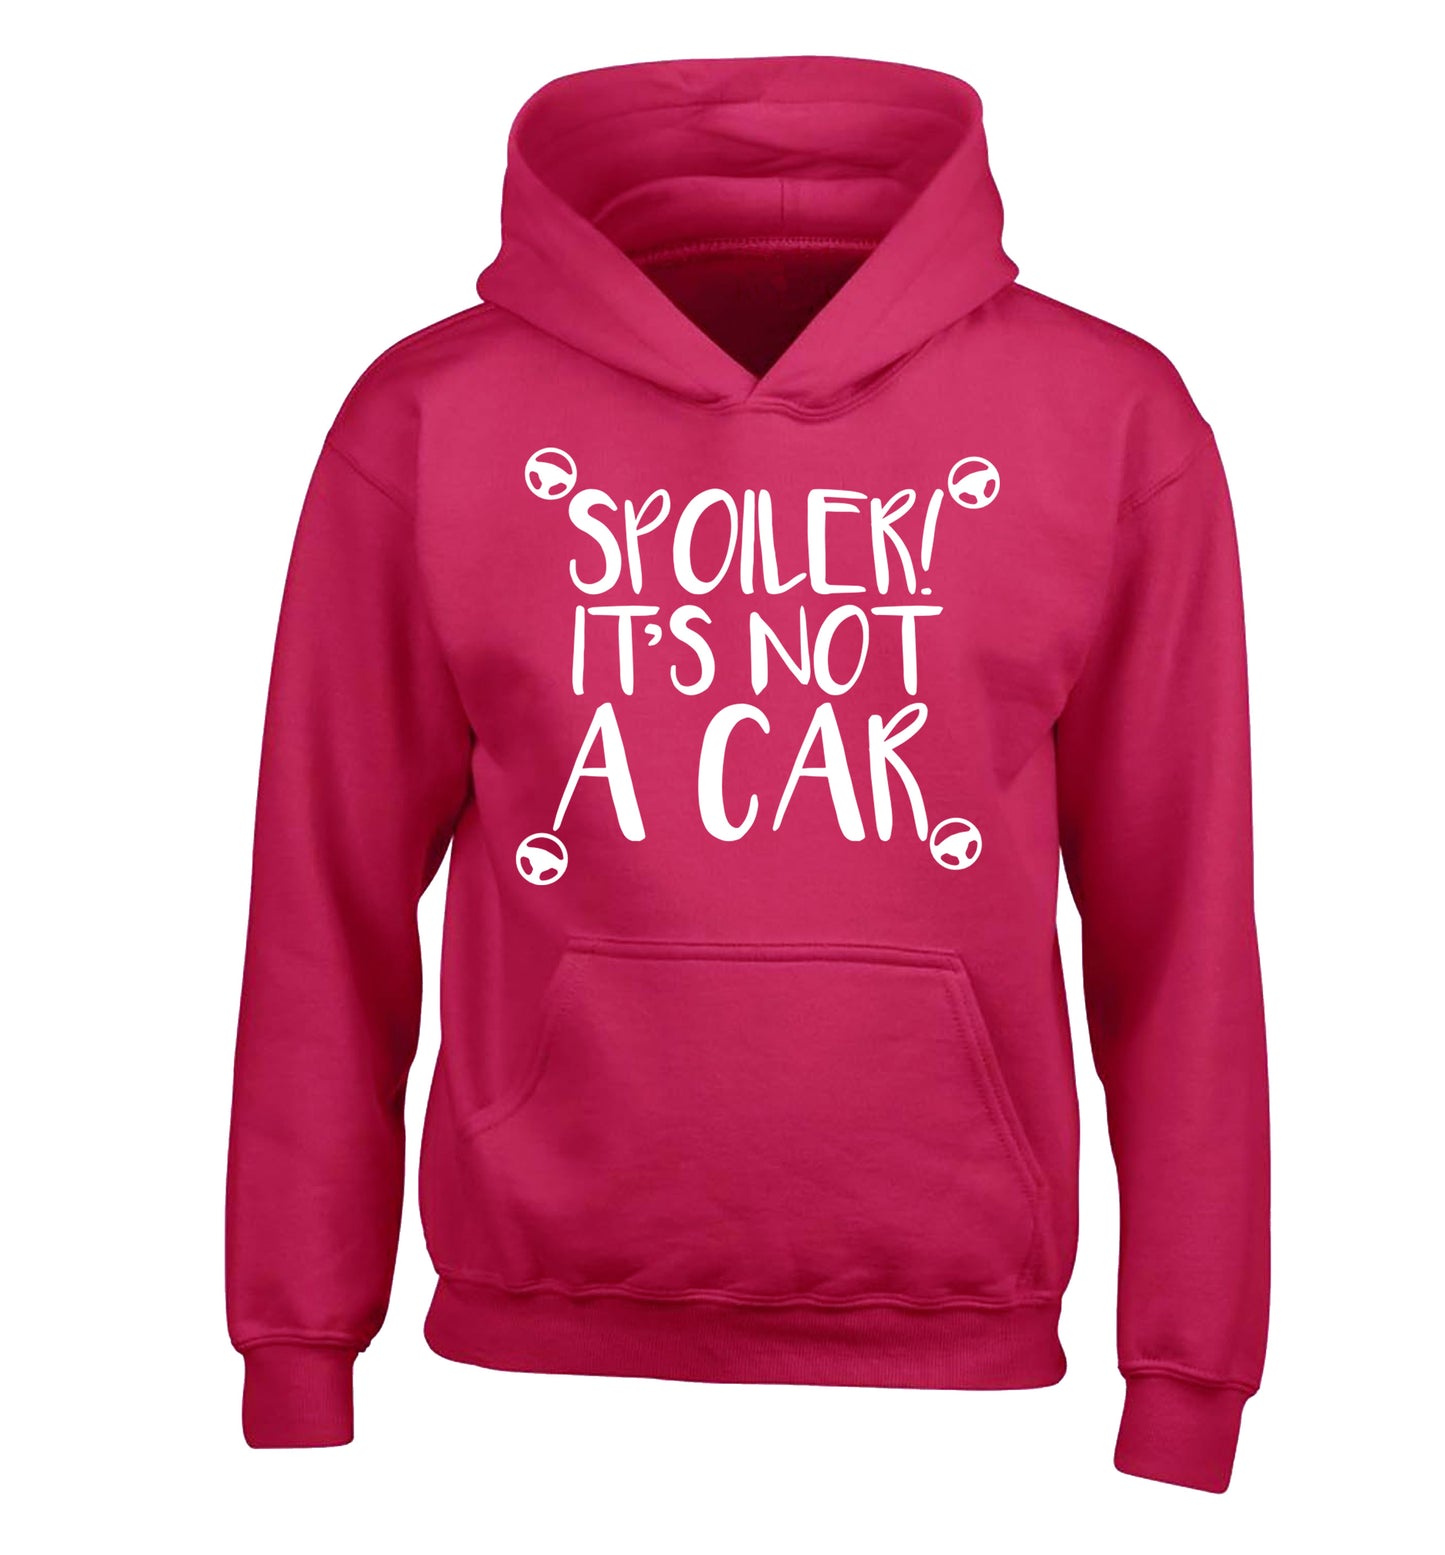 Spoiler it's not a car children's pink hoodie 12-13 Years